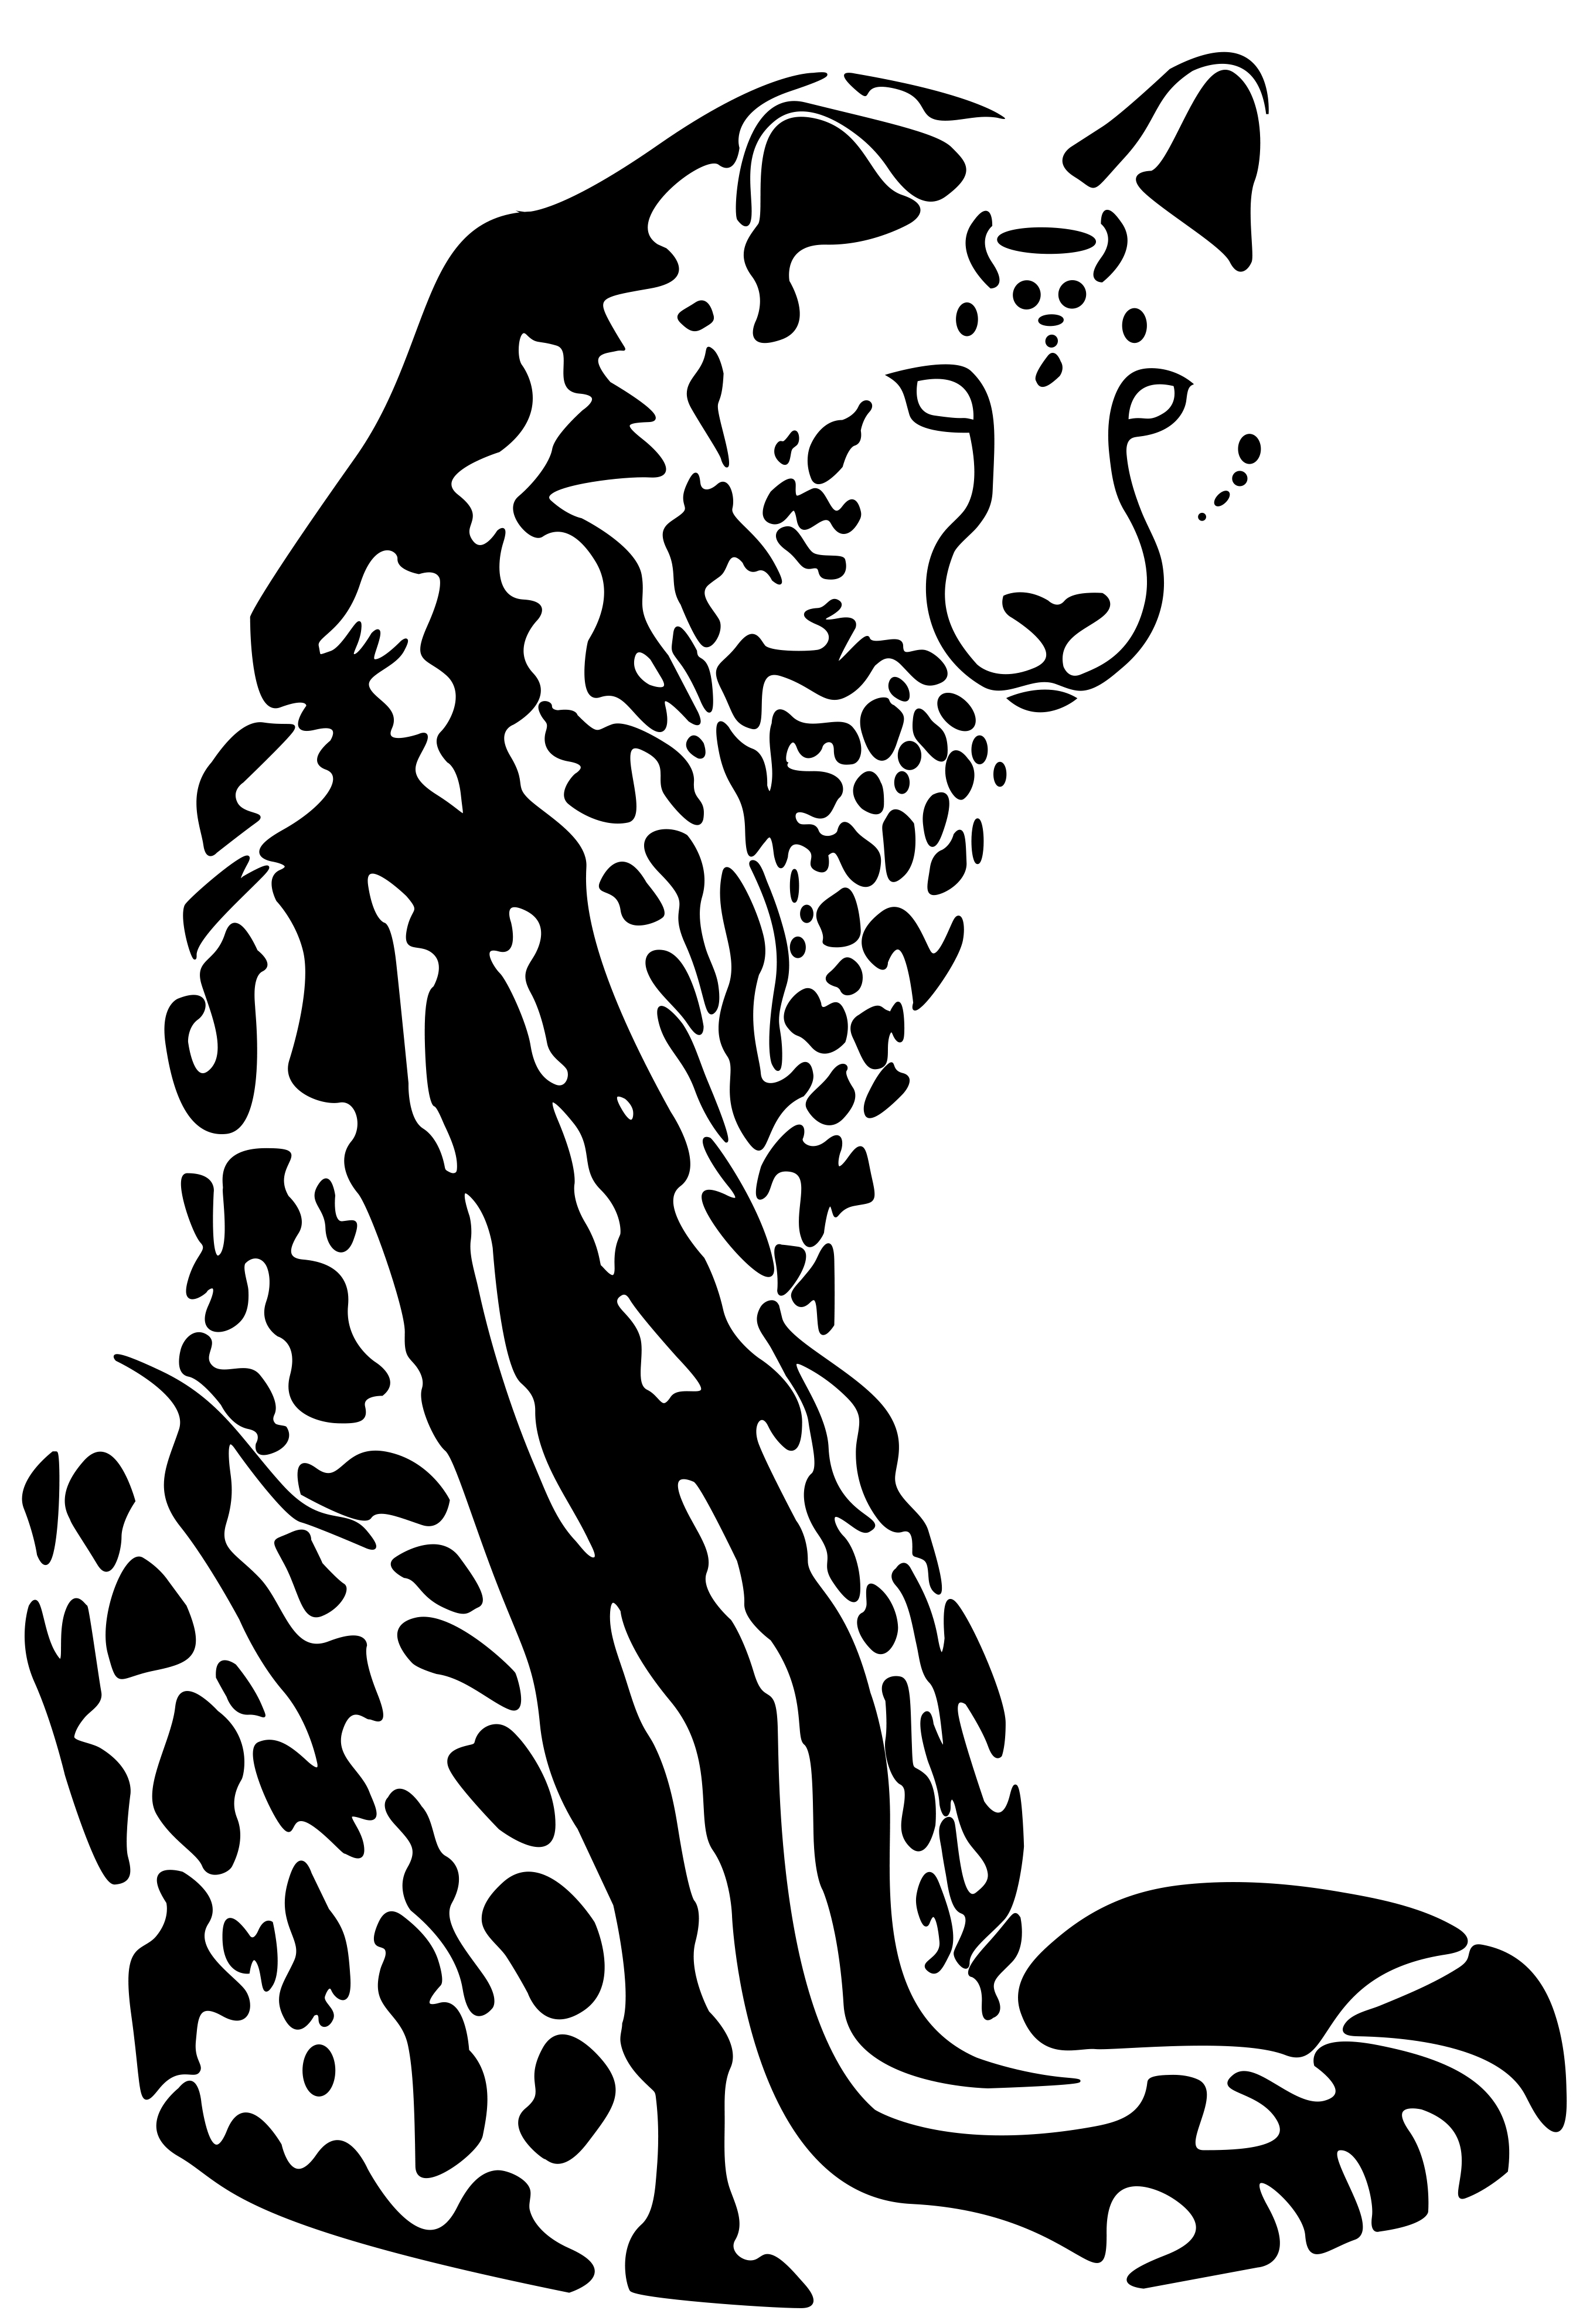 A king cheetah designed for silk-screening